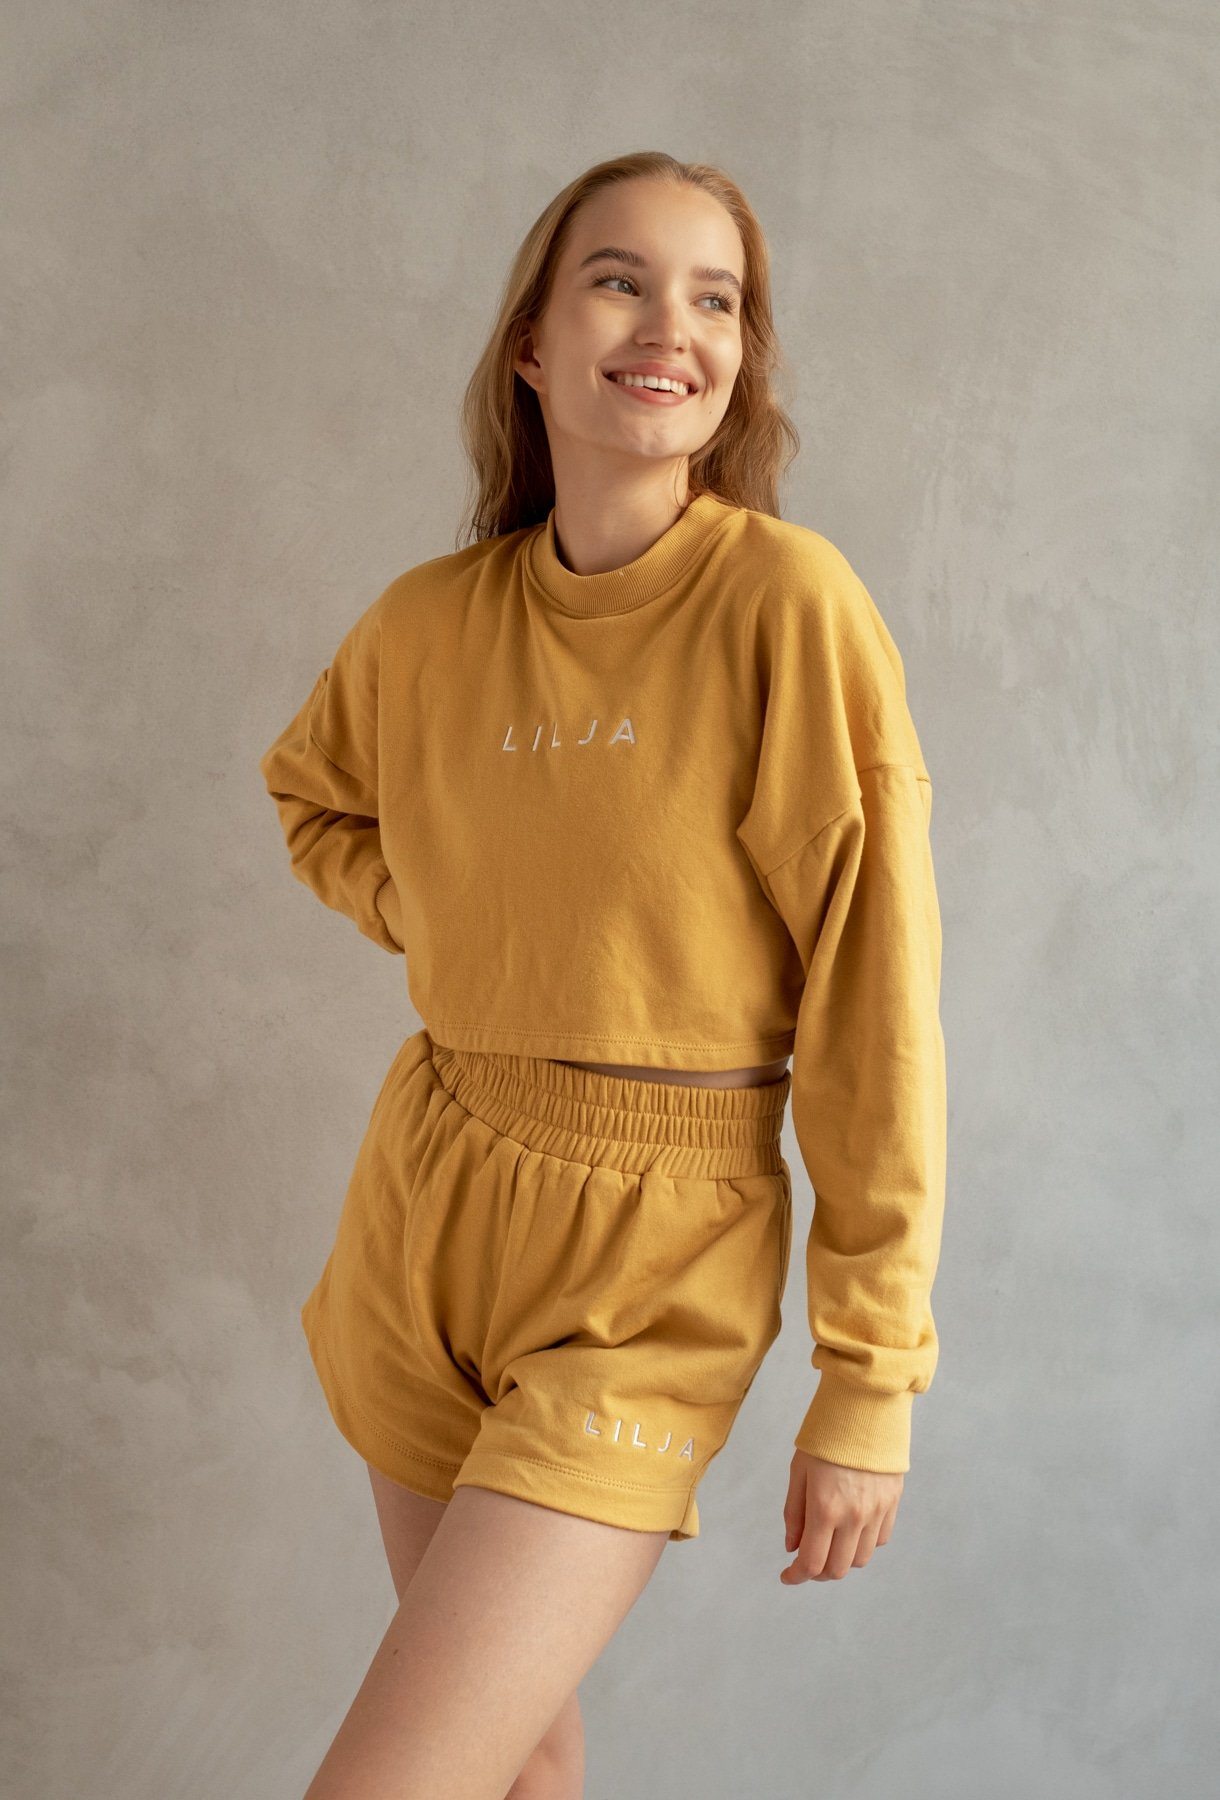 Lilja the Label Women's College Shorts - 100% GOTS Certified Organic Cotton, Mustard / XS